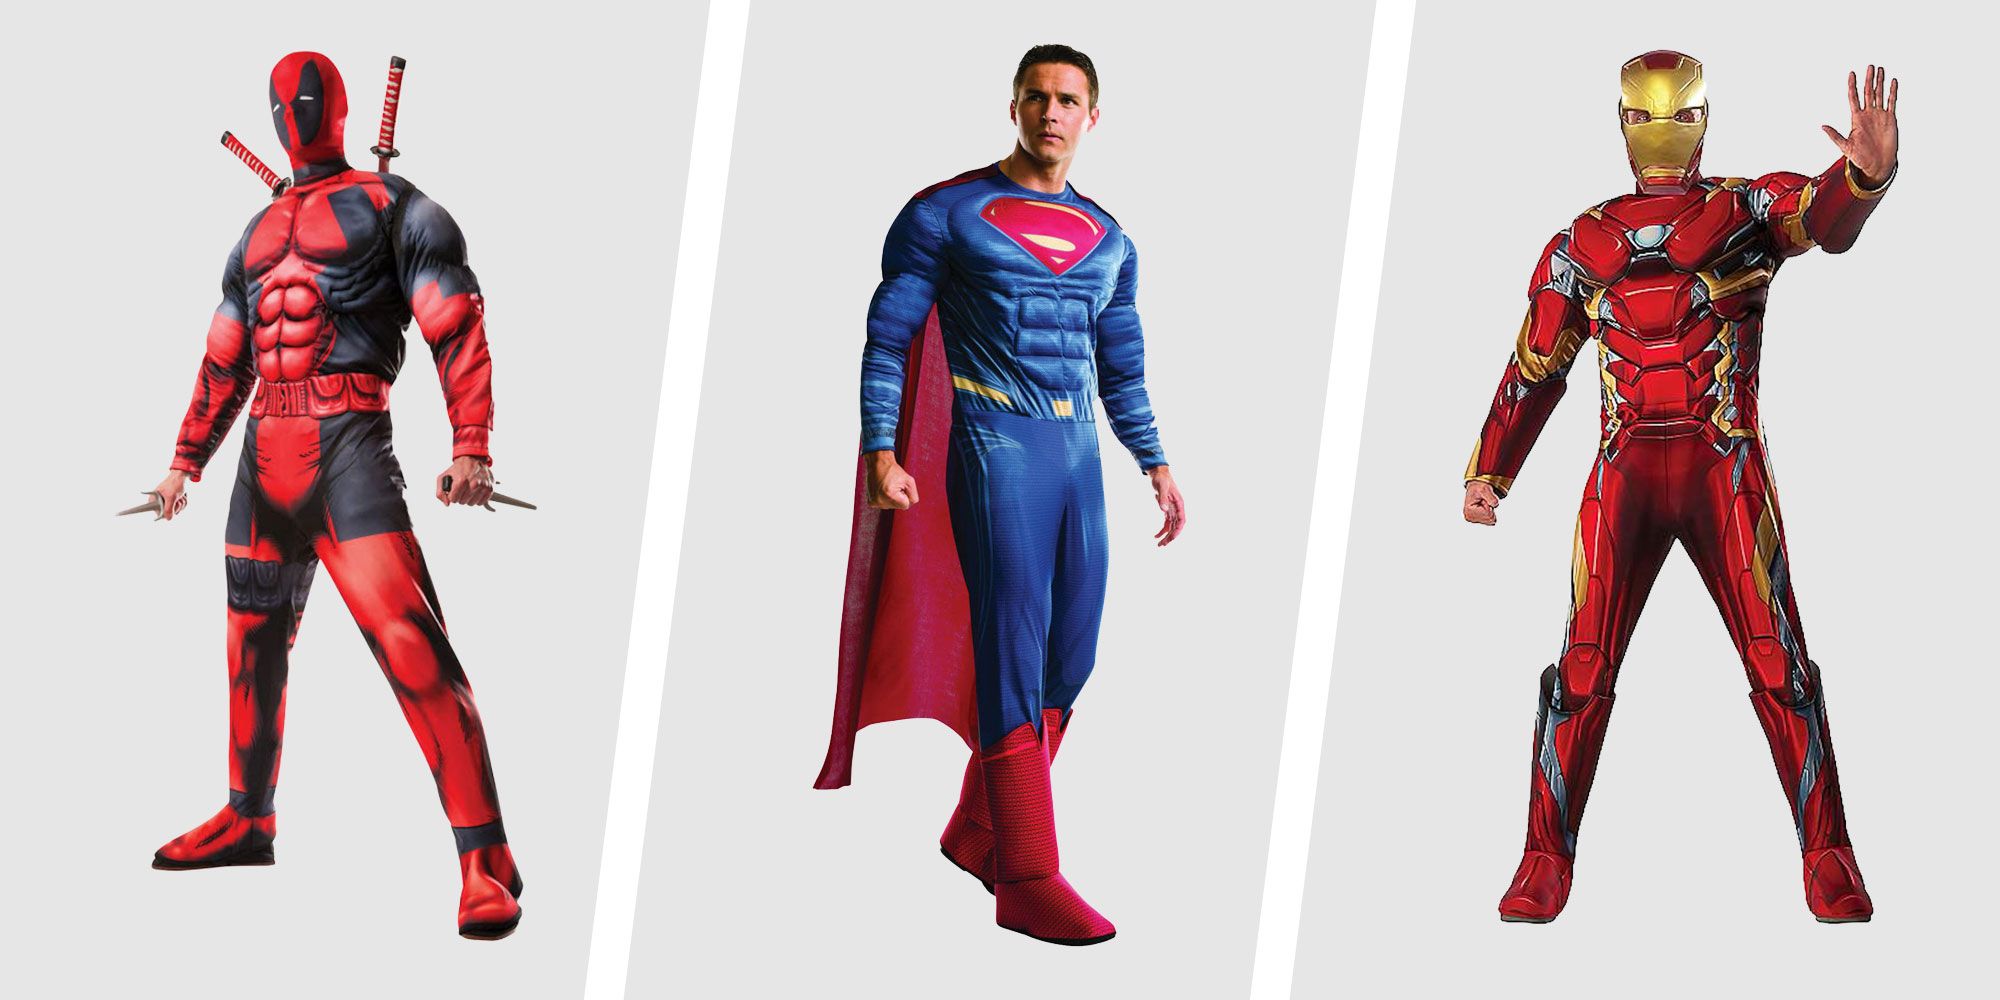 cool superhero costumes